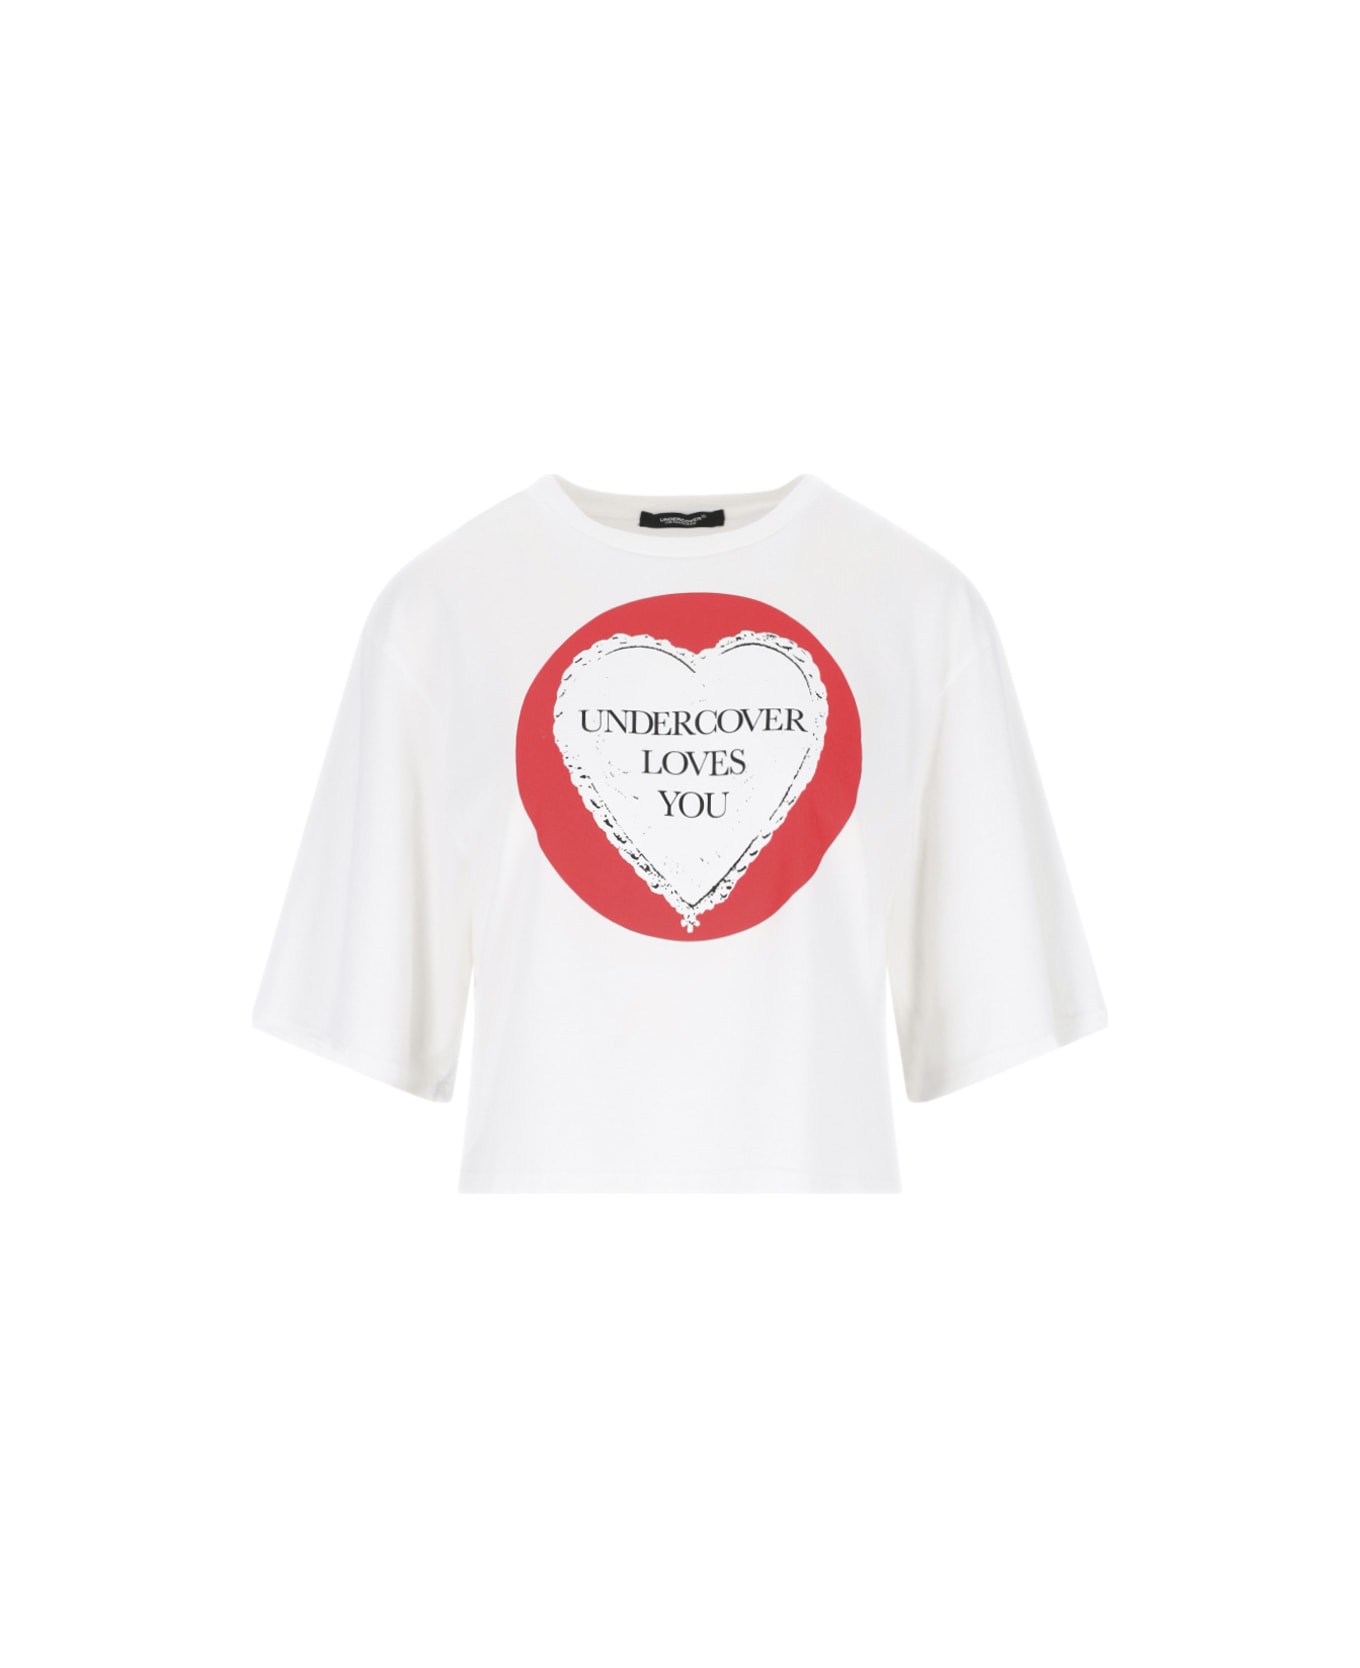 Undercover Jun Takahashi Printed Crop T-shirt - White